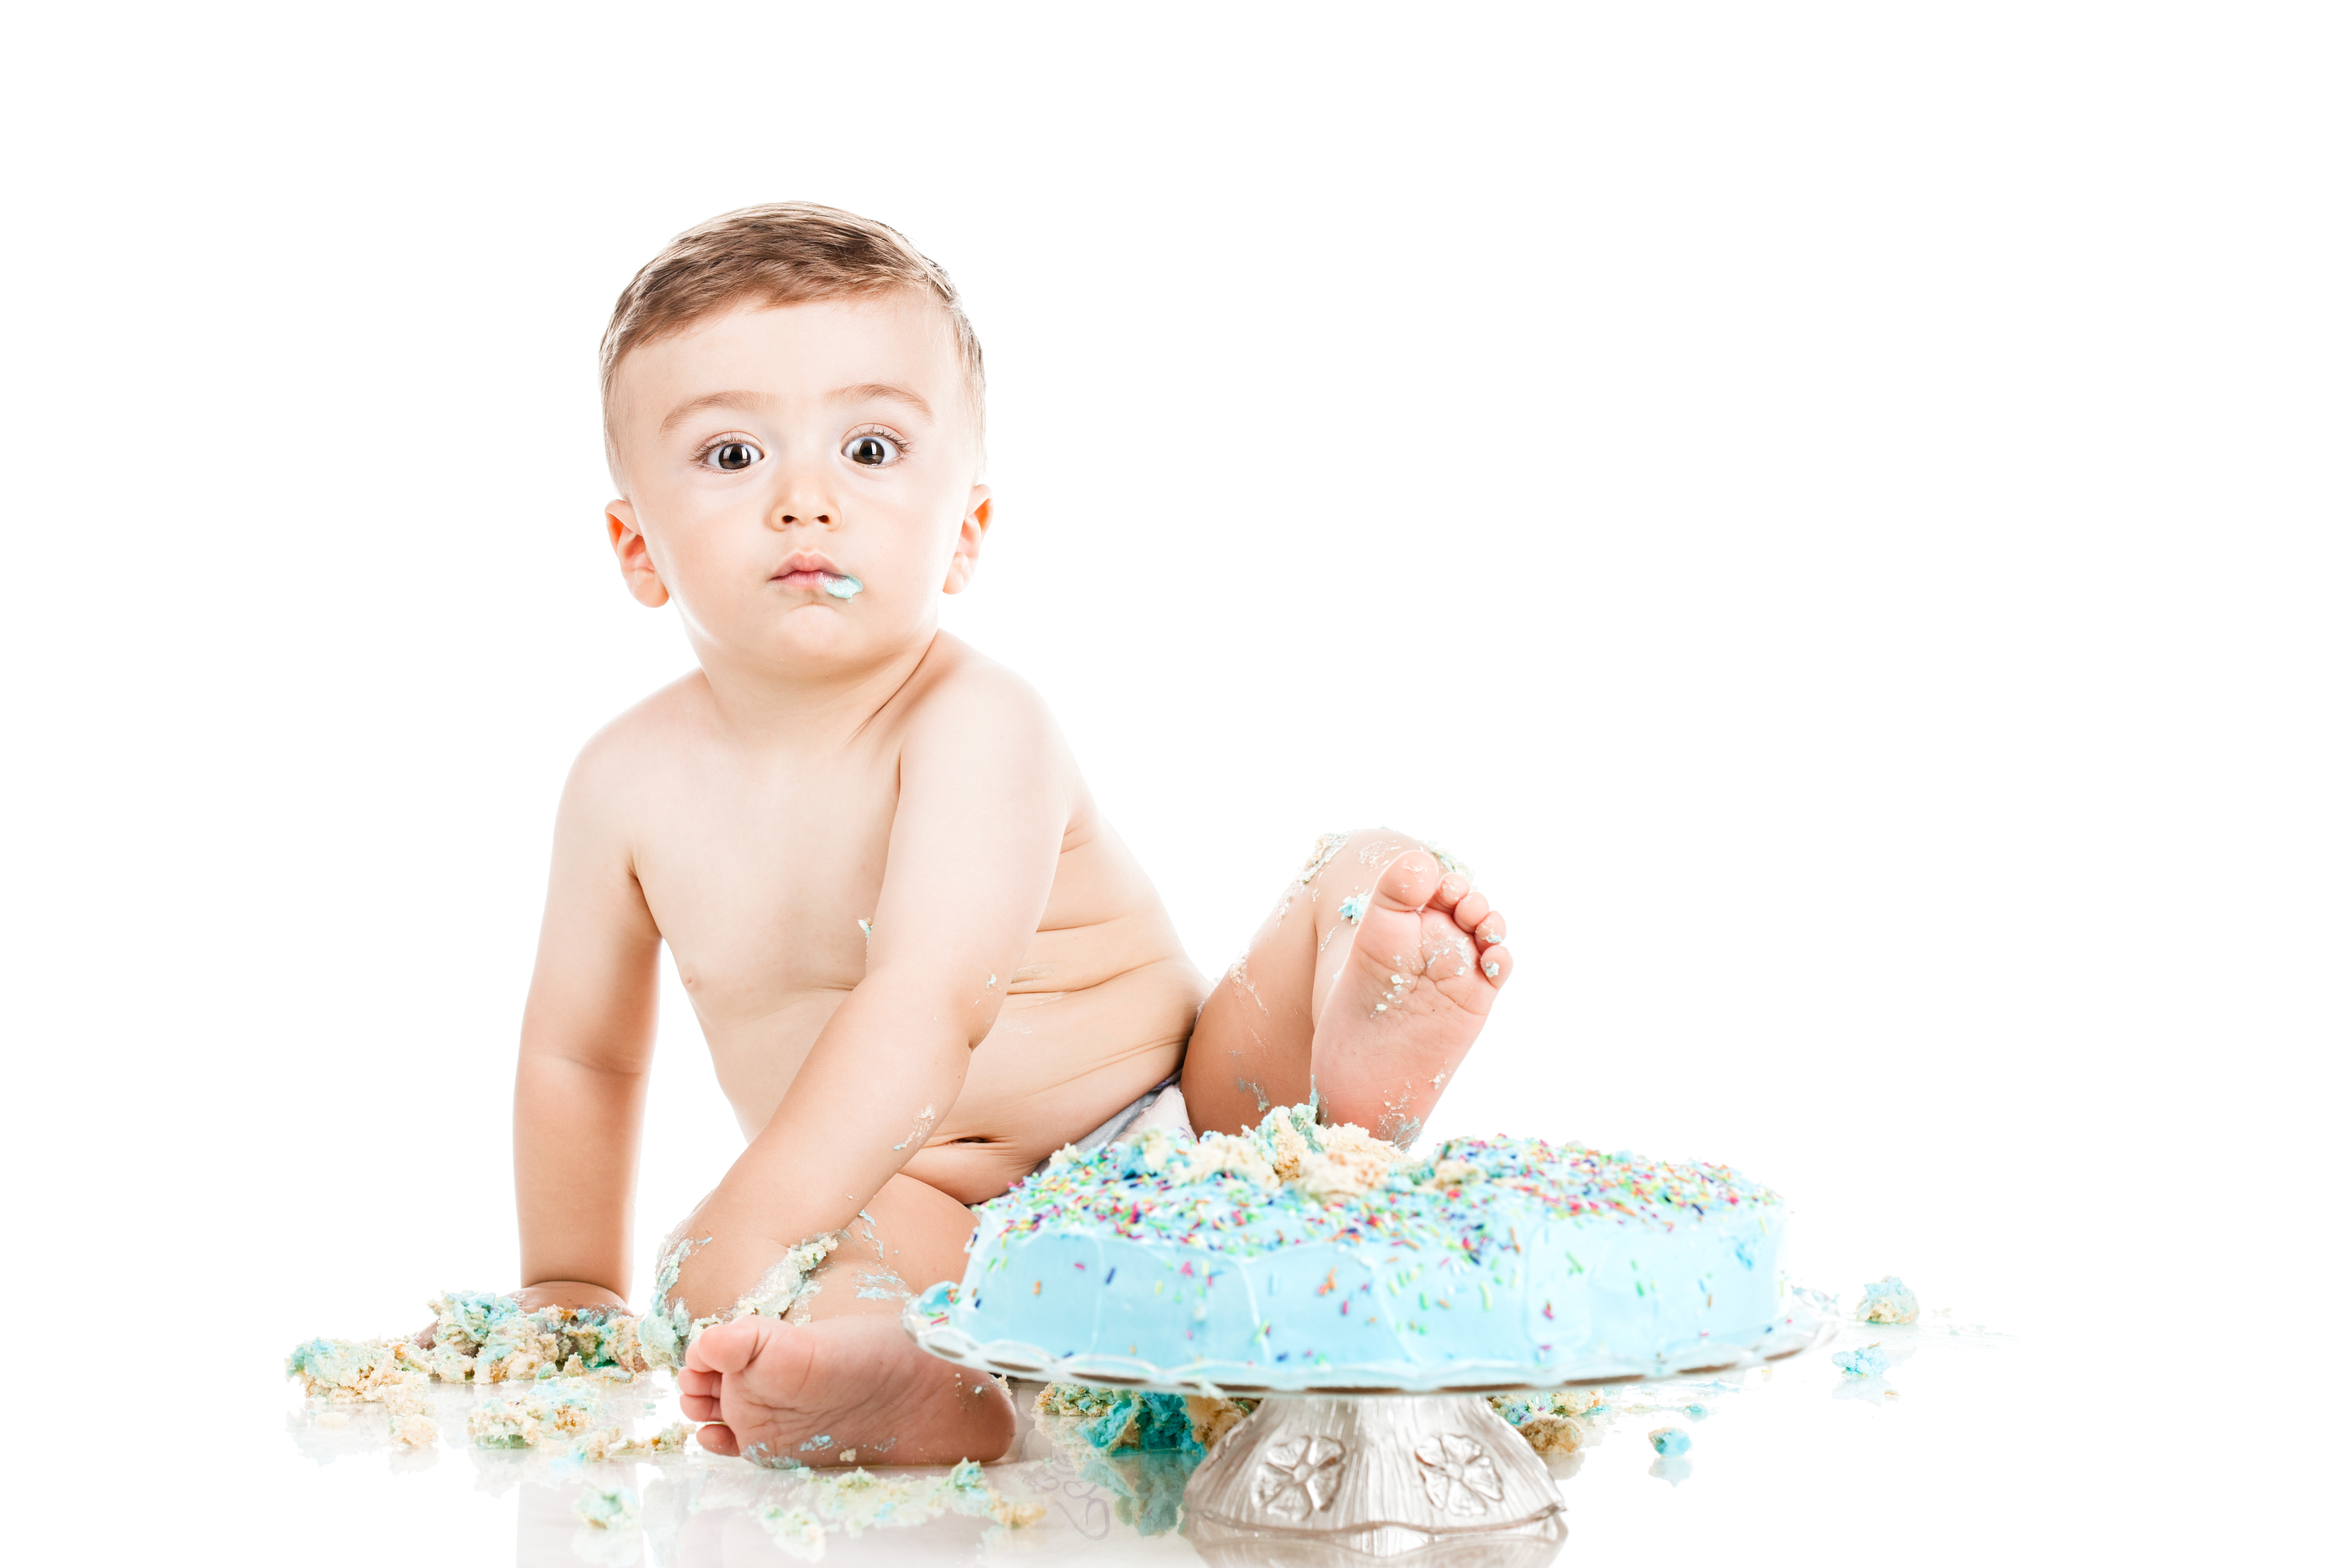 How to Do a Kids’ Birthday Smash Cake Photo Right